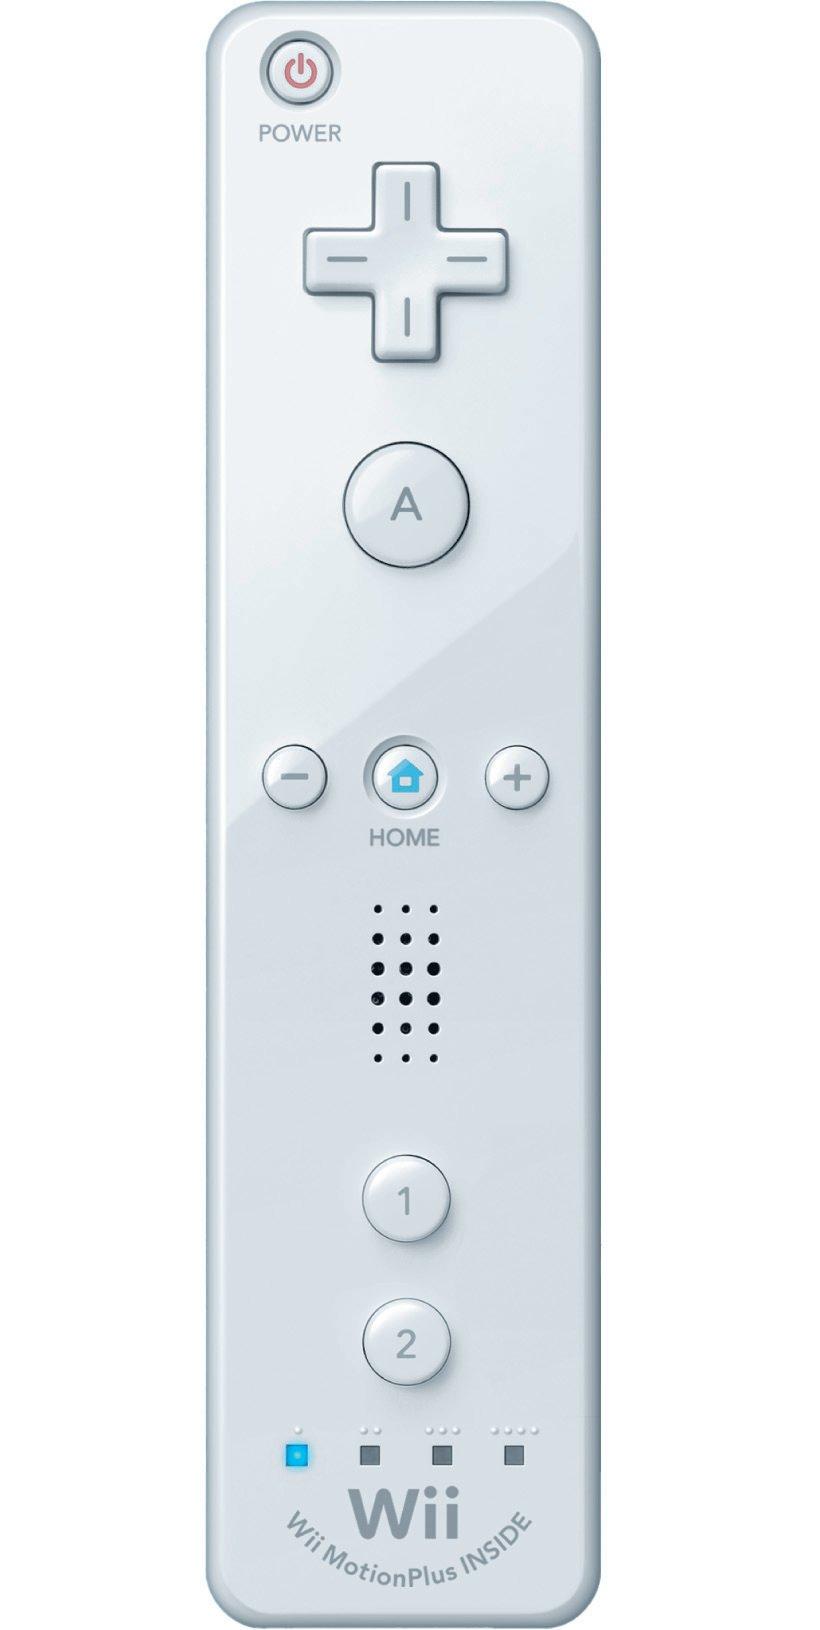 Nintendo Wii U Remote Plus